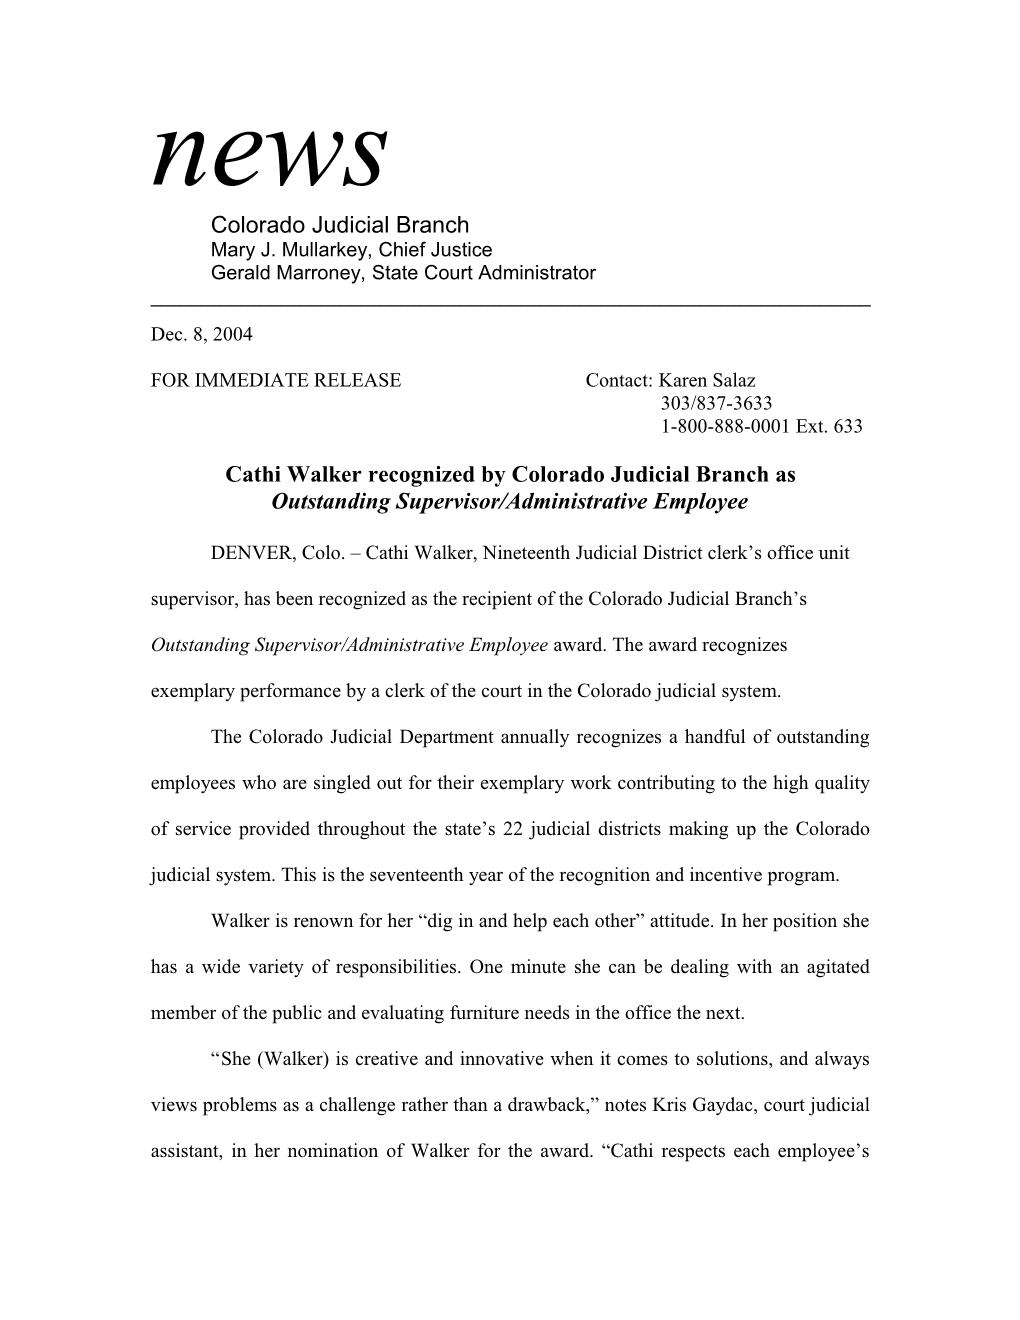 Cathi Walker Recognized by Colorado Judicial Branch As